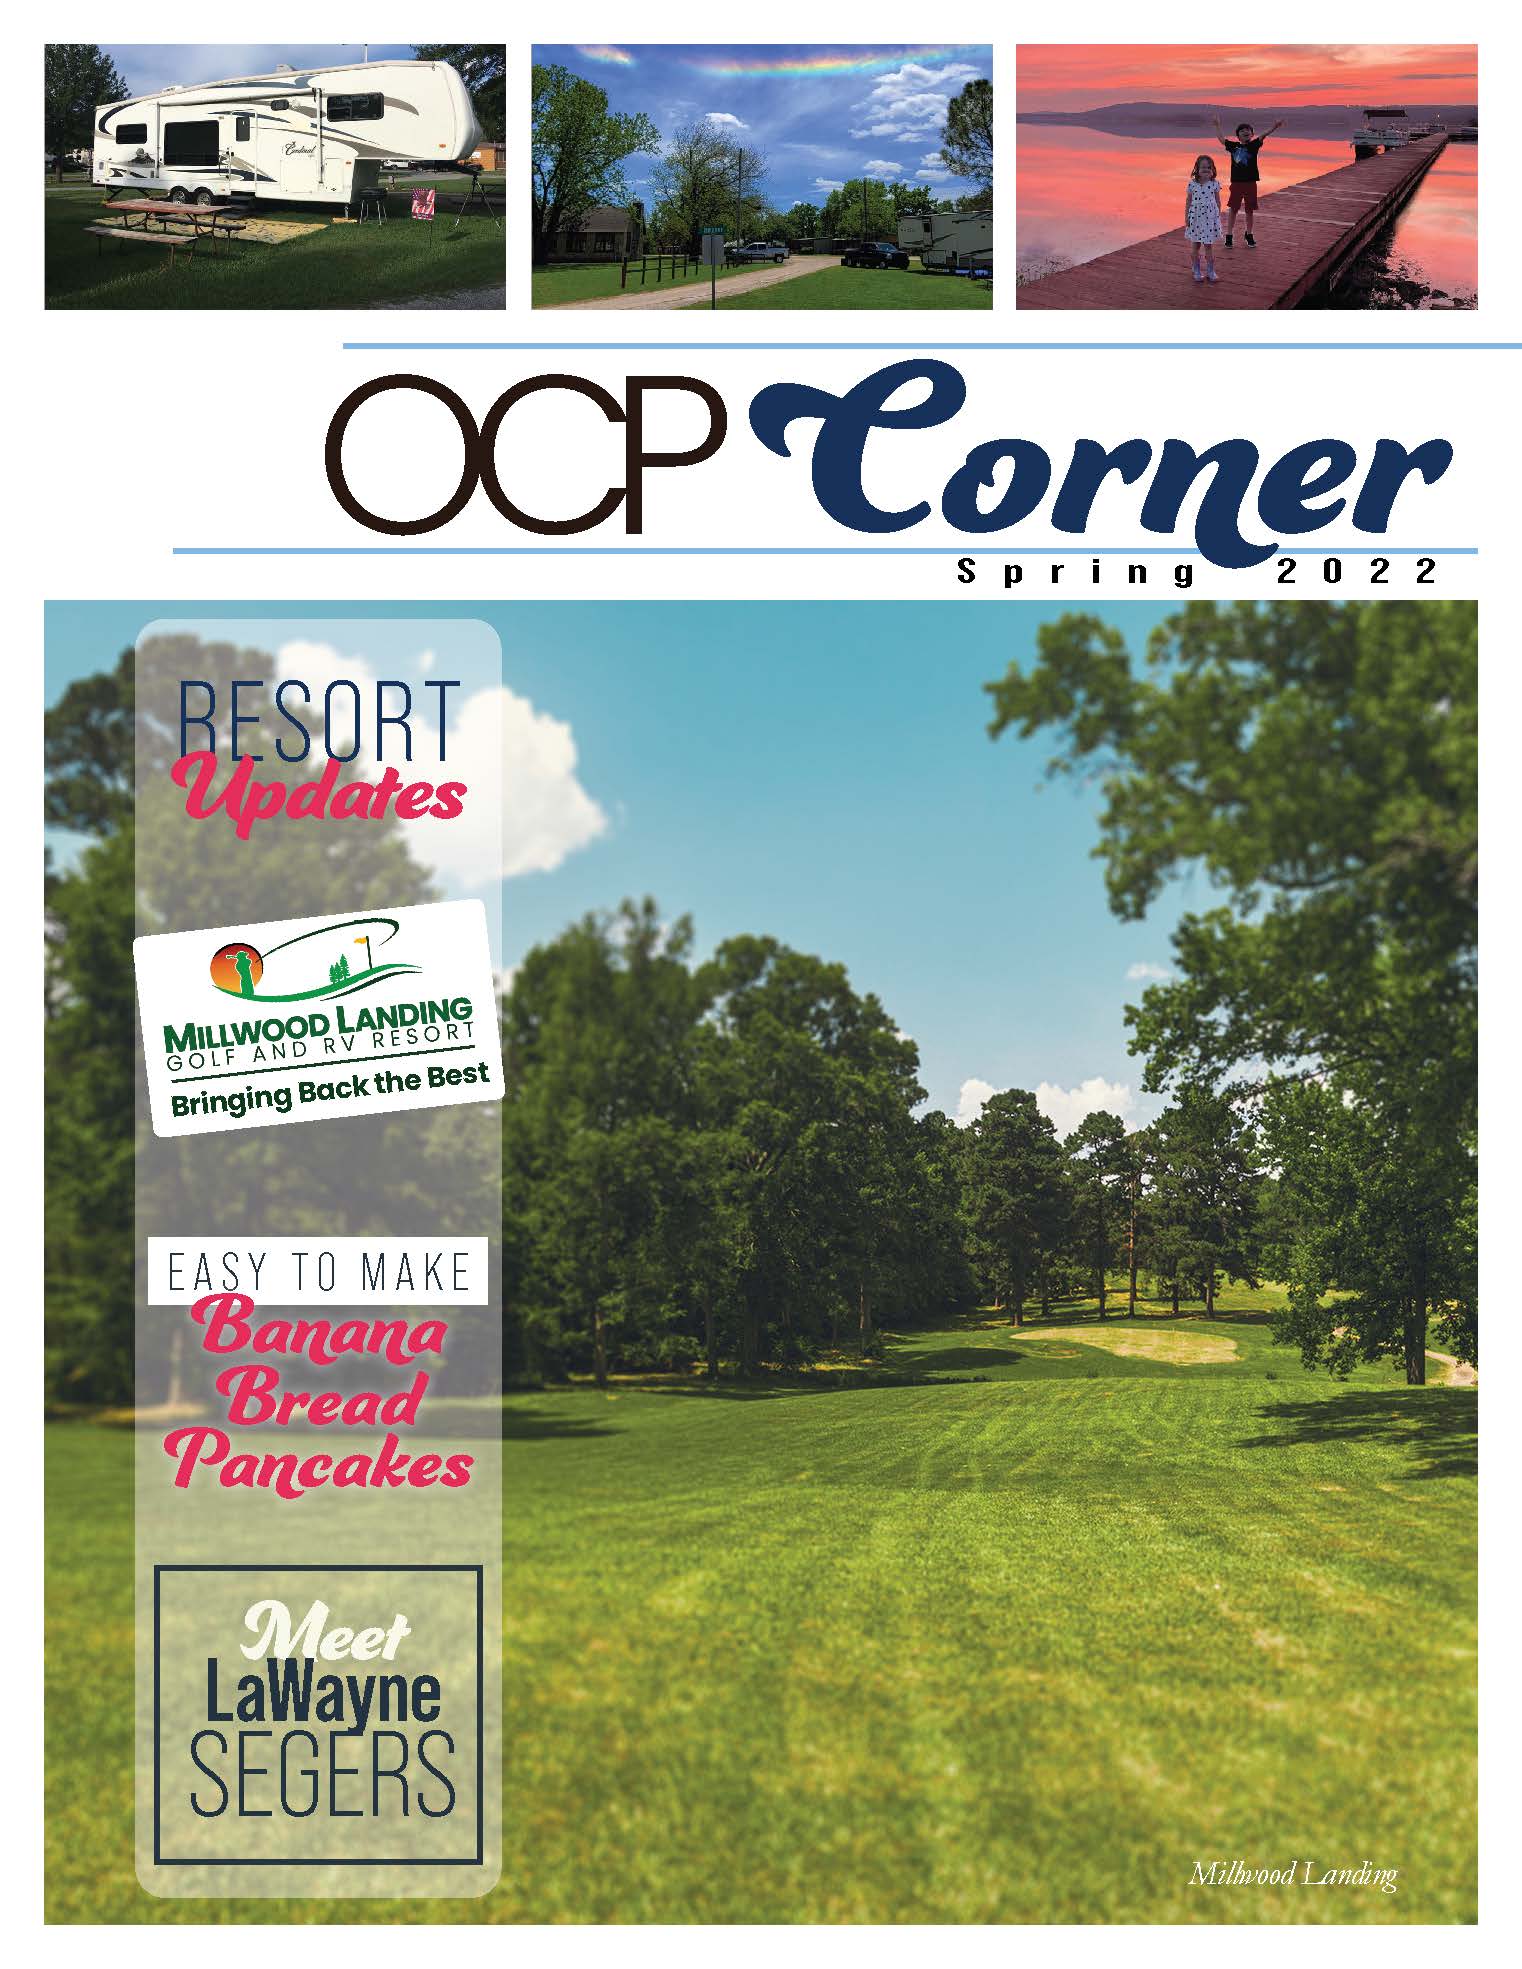 OCP Corner - Spring 2022 Edition